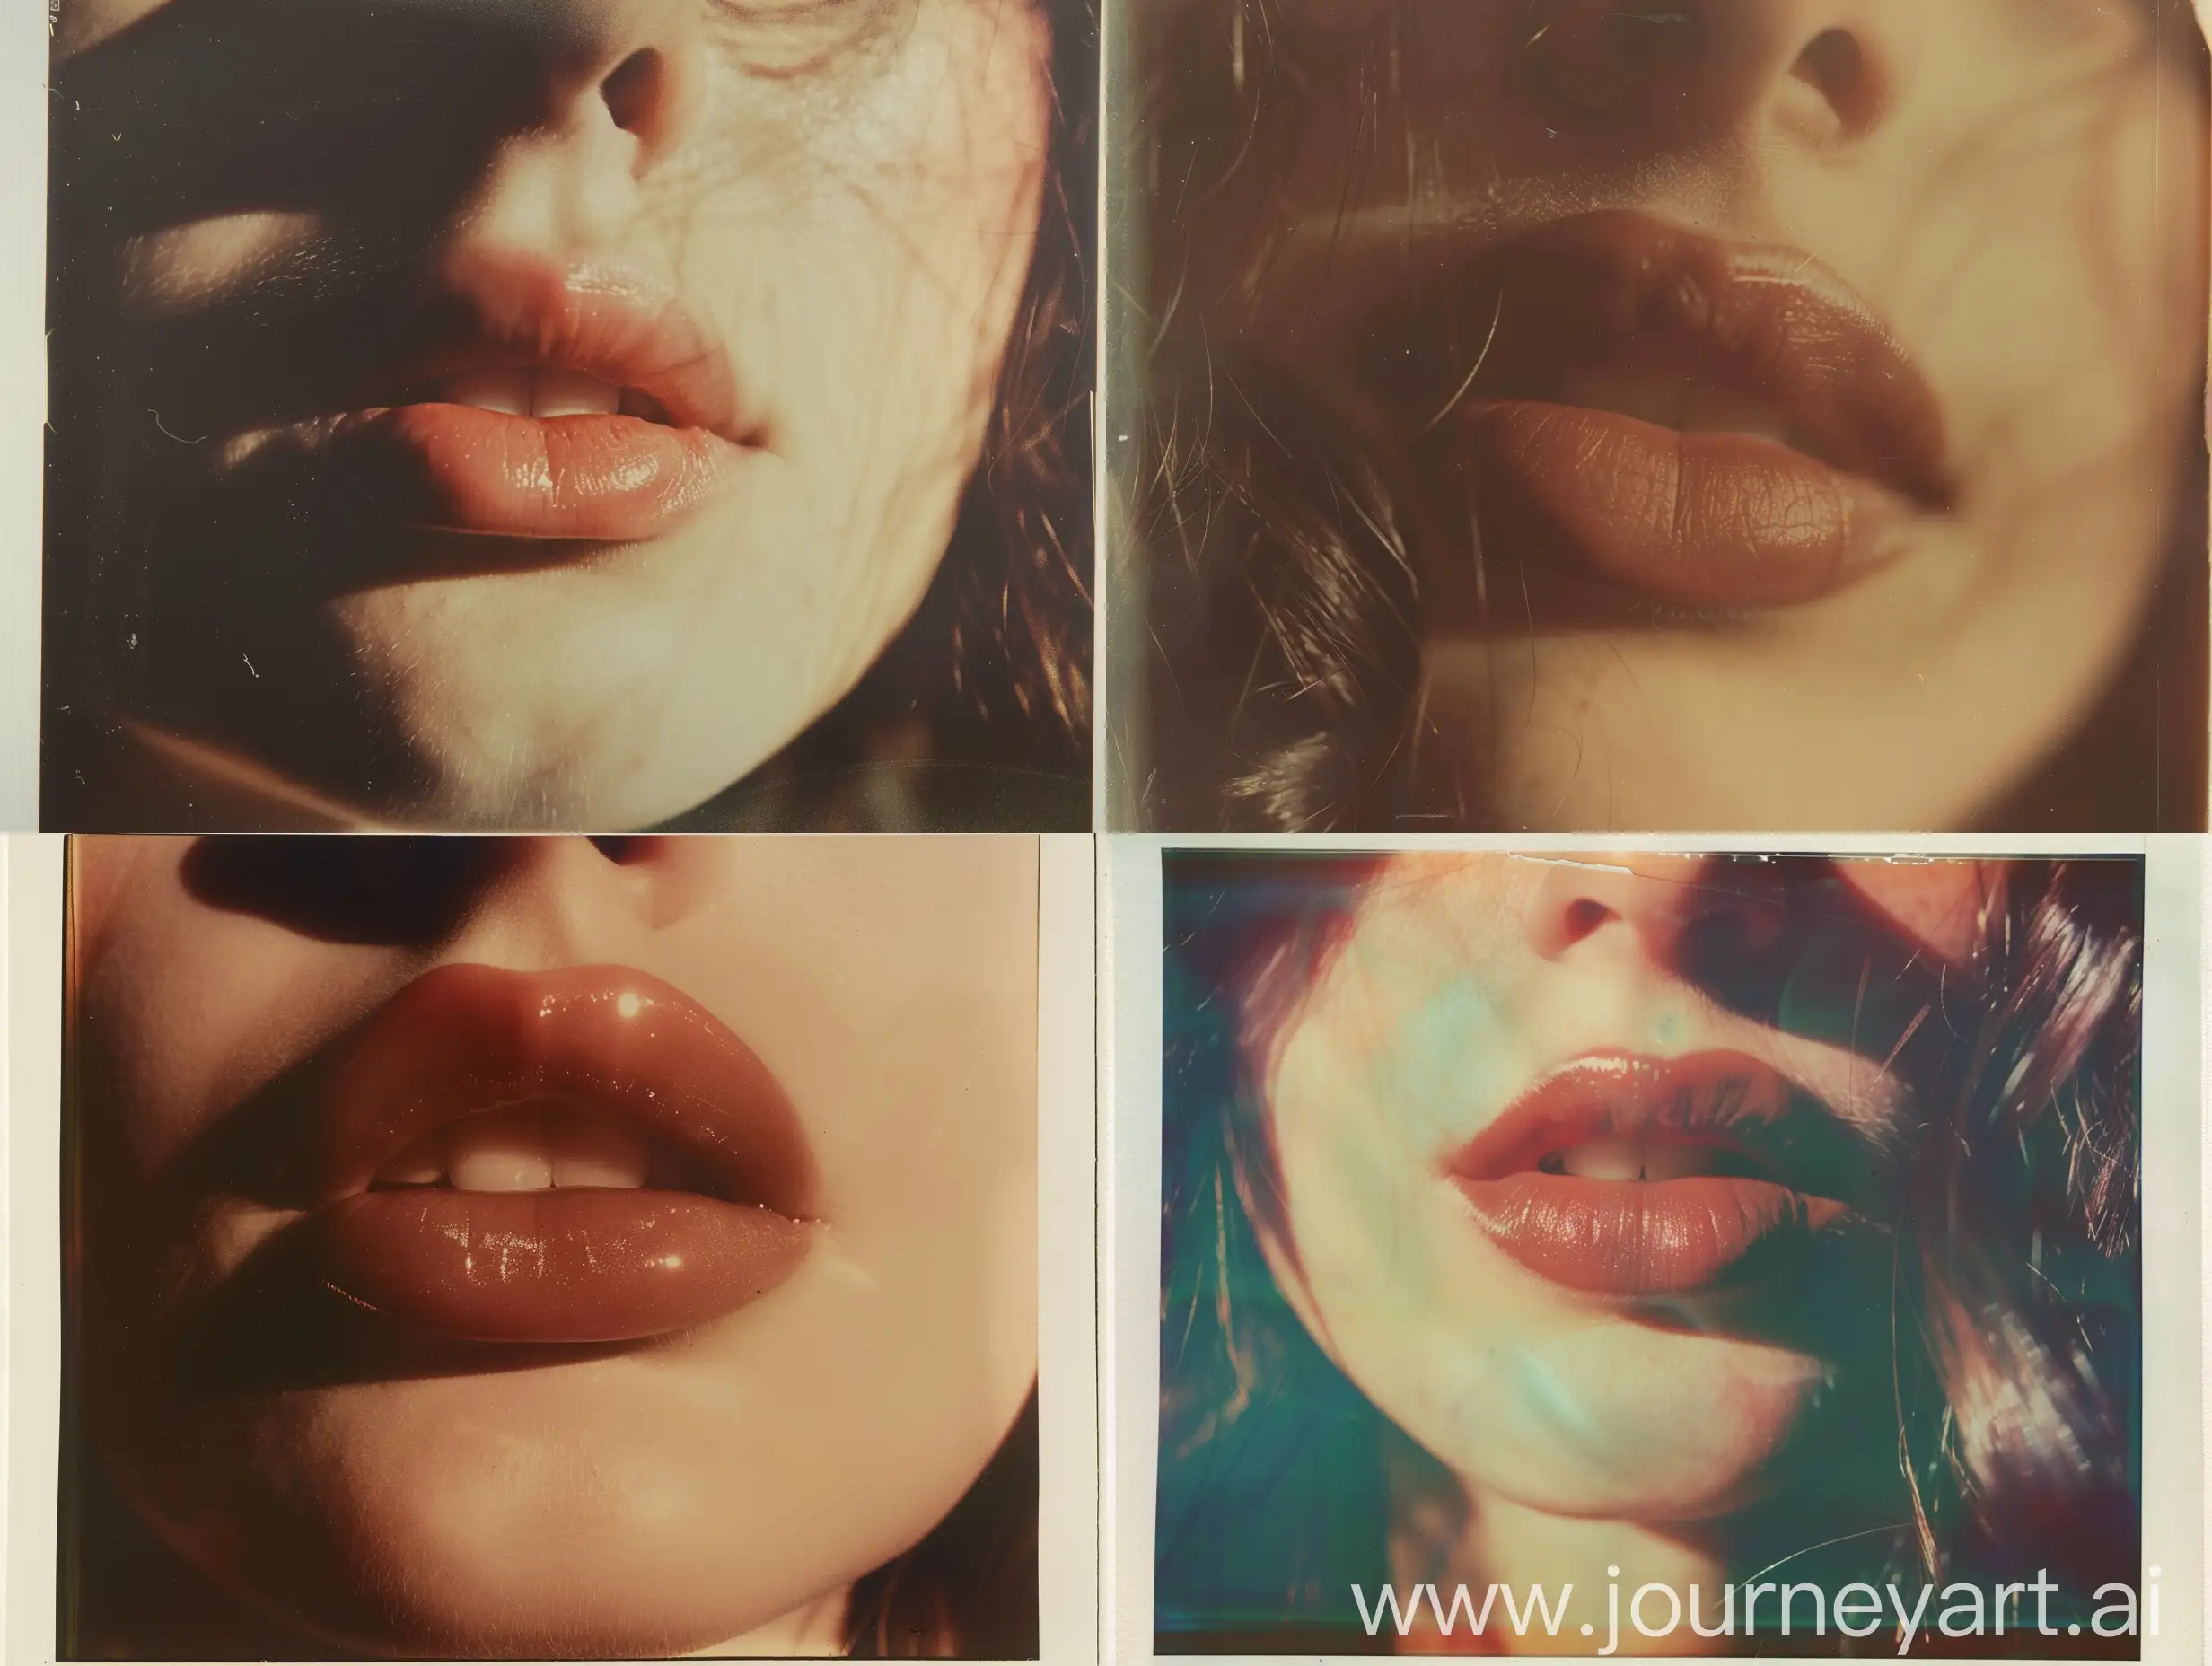 4x4 closeup of Gracie Abrams's lips, 2022... flash on, vintage instant polaroid photo.